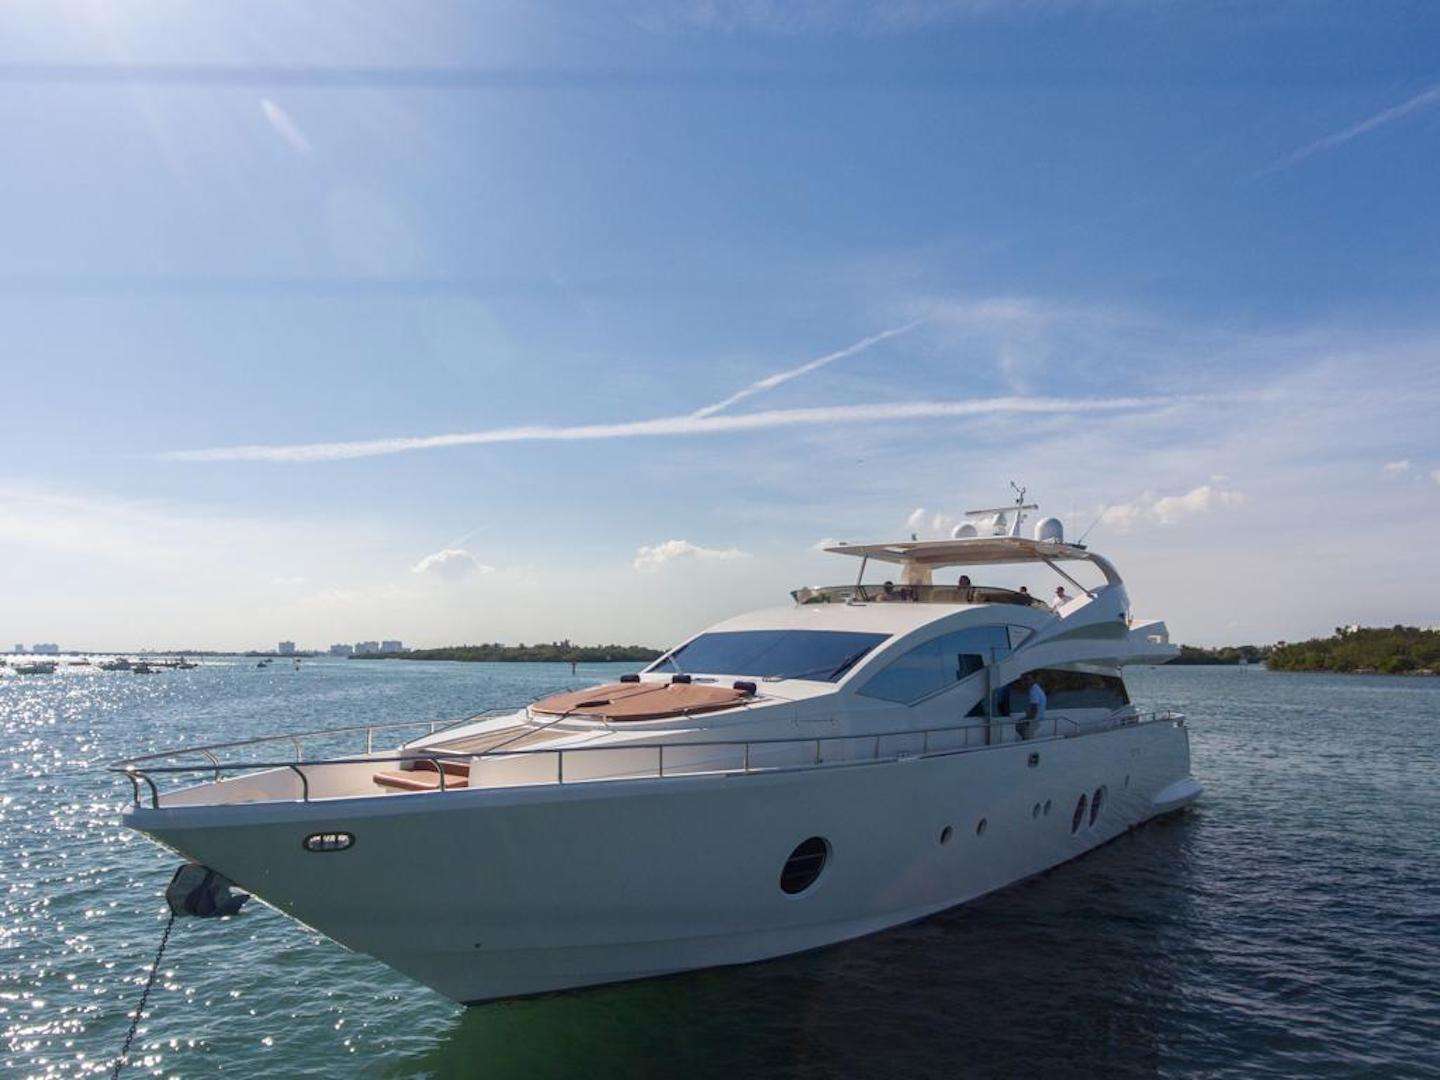 blu ocean - Yacht Charter La Paz & Boat hire in US East Coast, Bahamas & Mexico 1